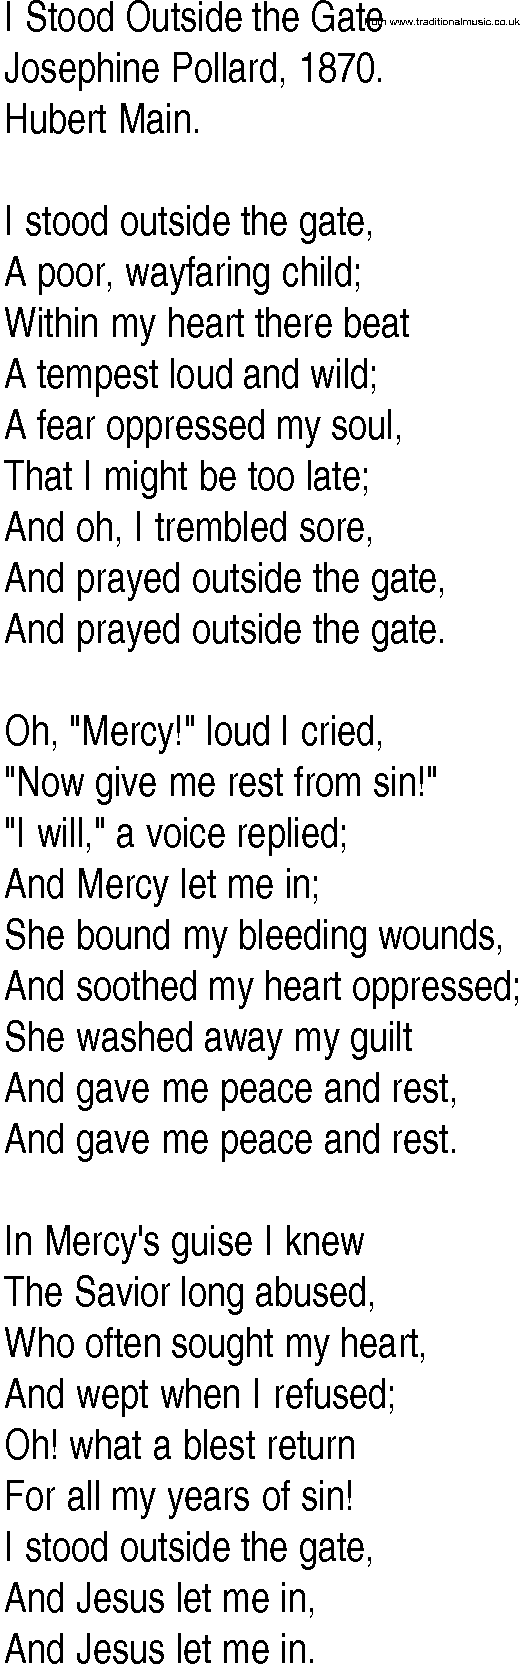 Hymn and Gospel Song: I Stood Outside the Gate by Josephine Pollard lyrics